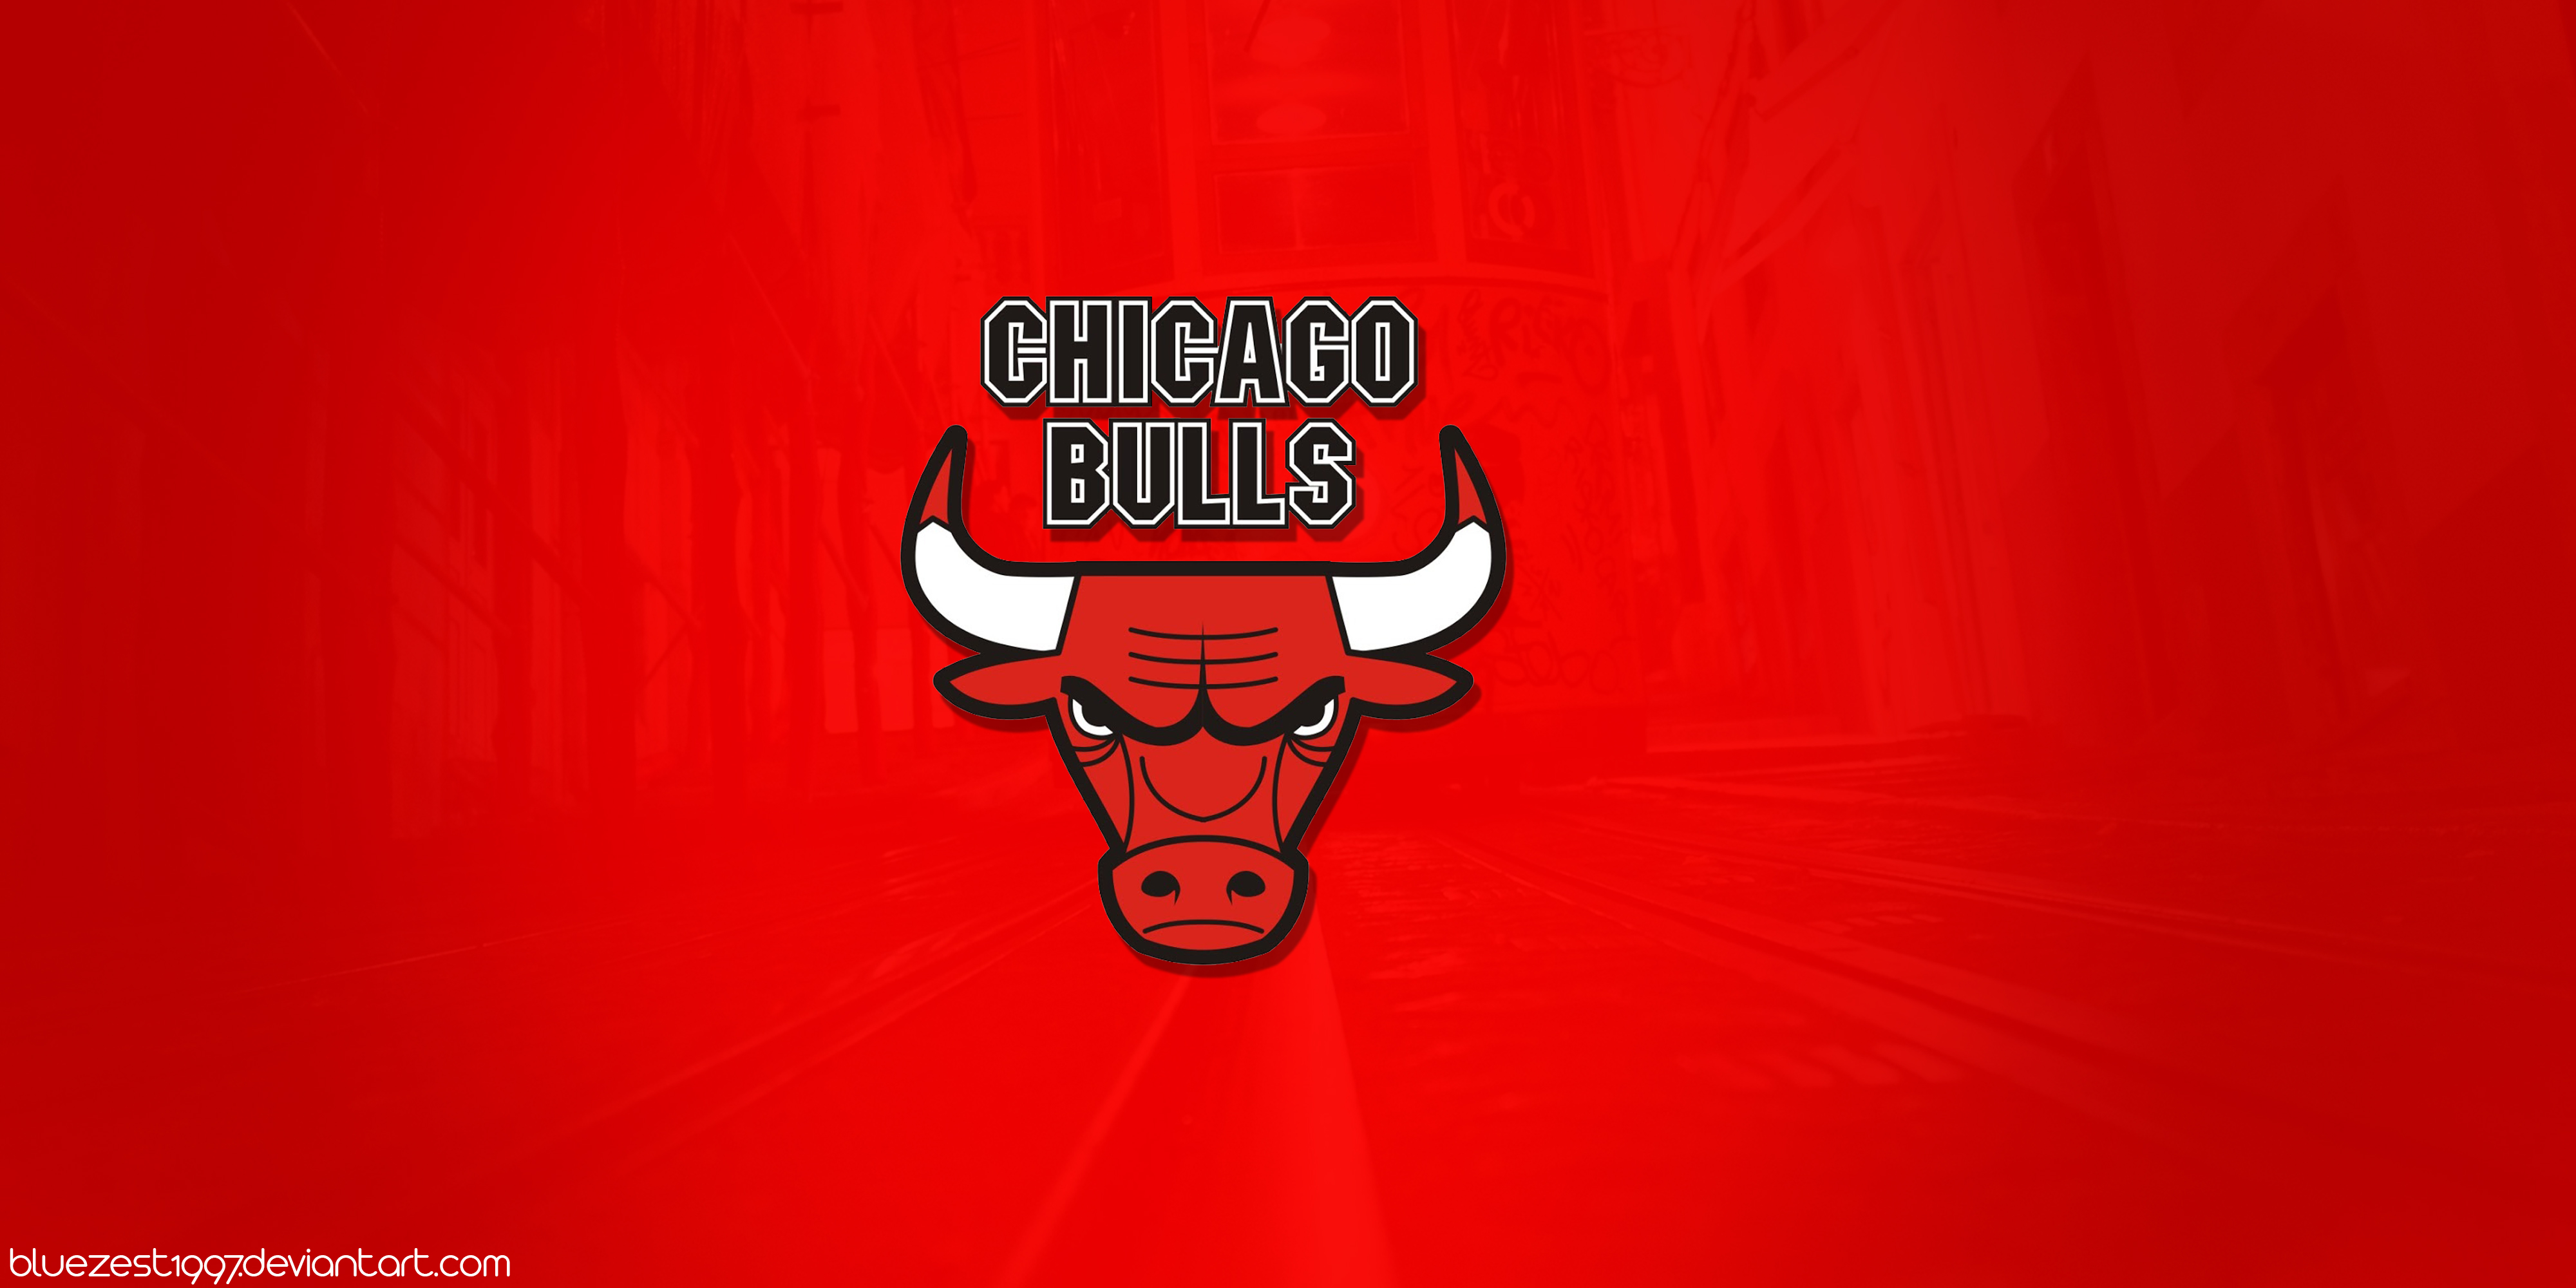 Nba Bulls Wallpaper Chicago bulls wallpaper by